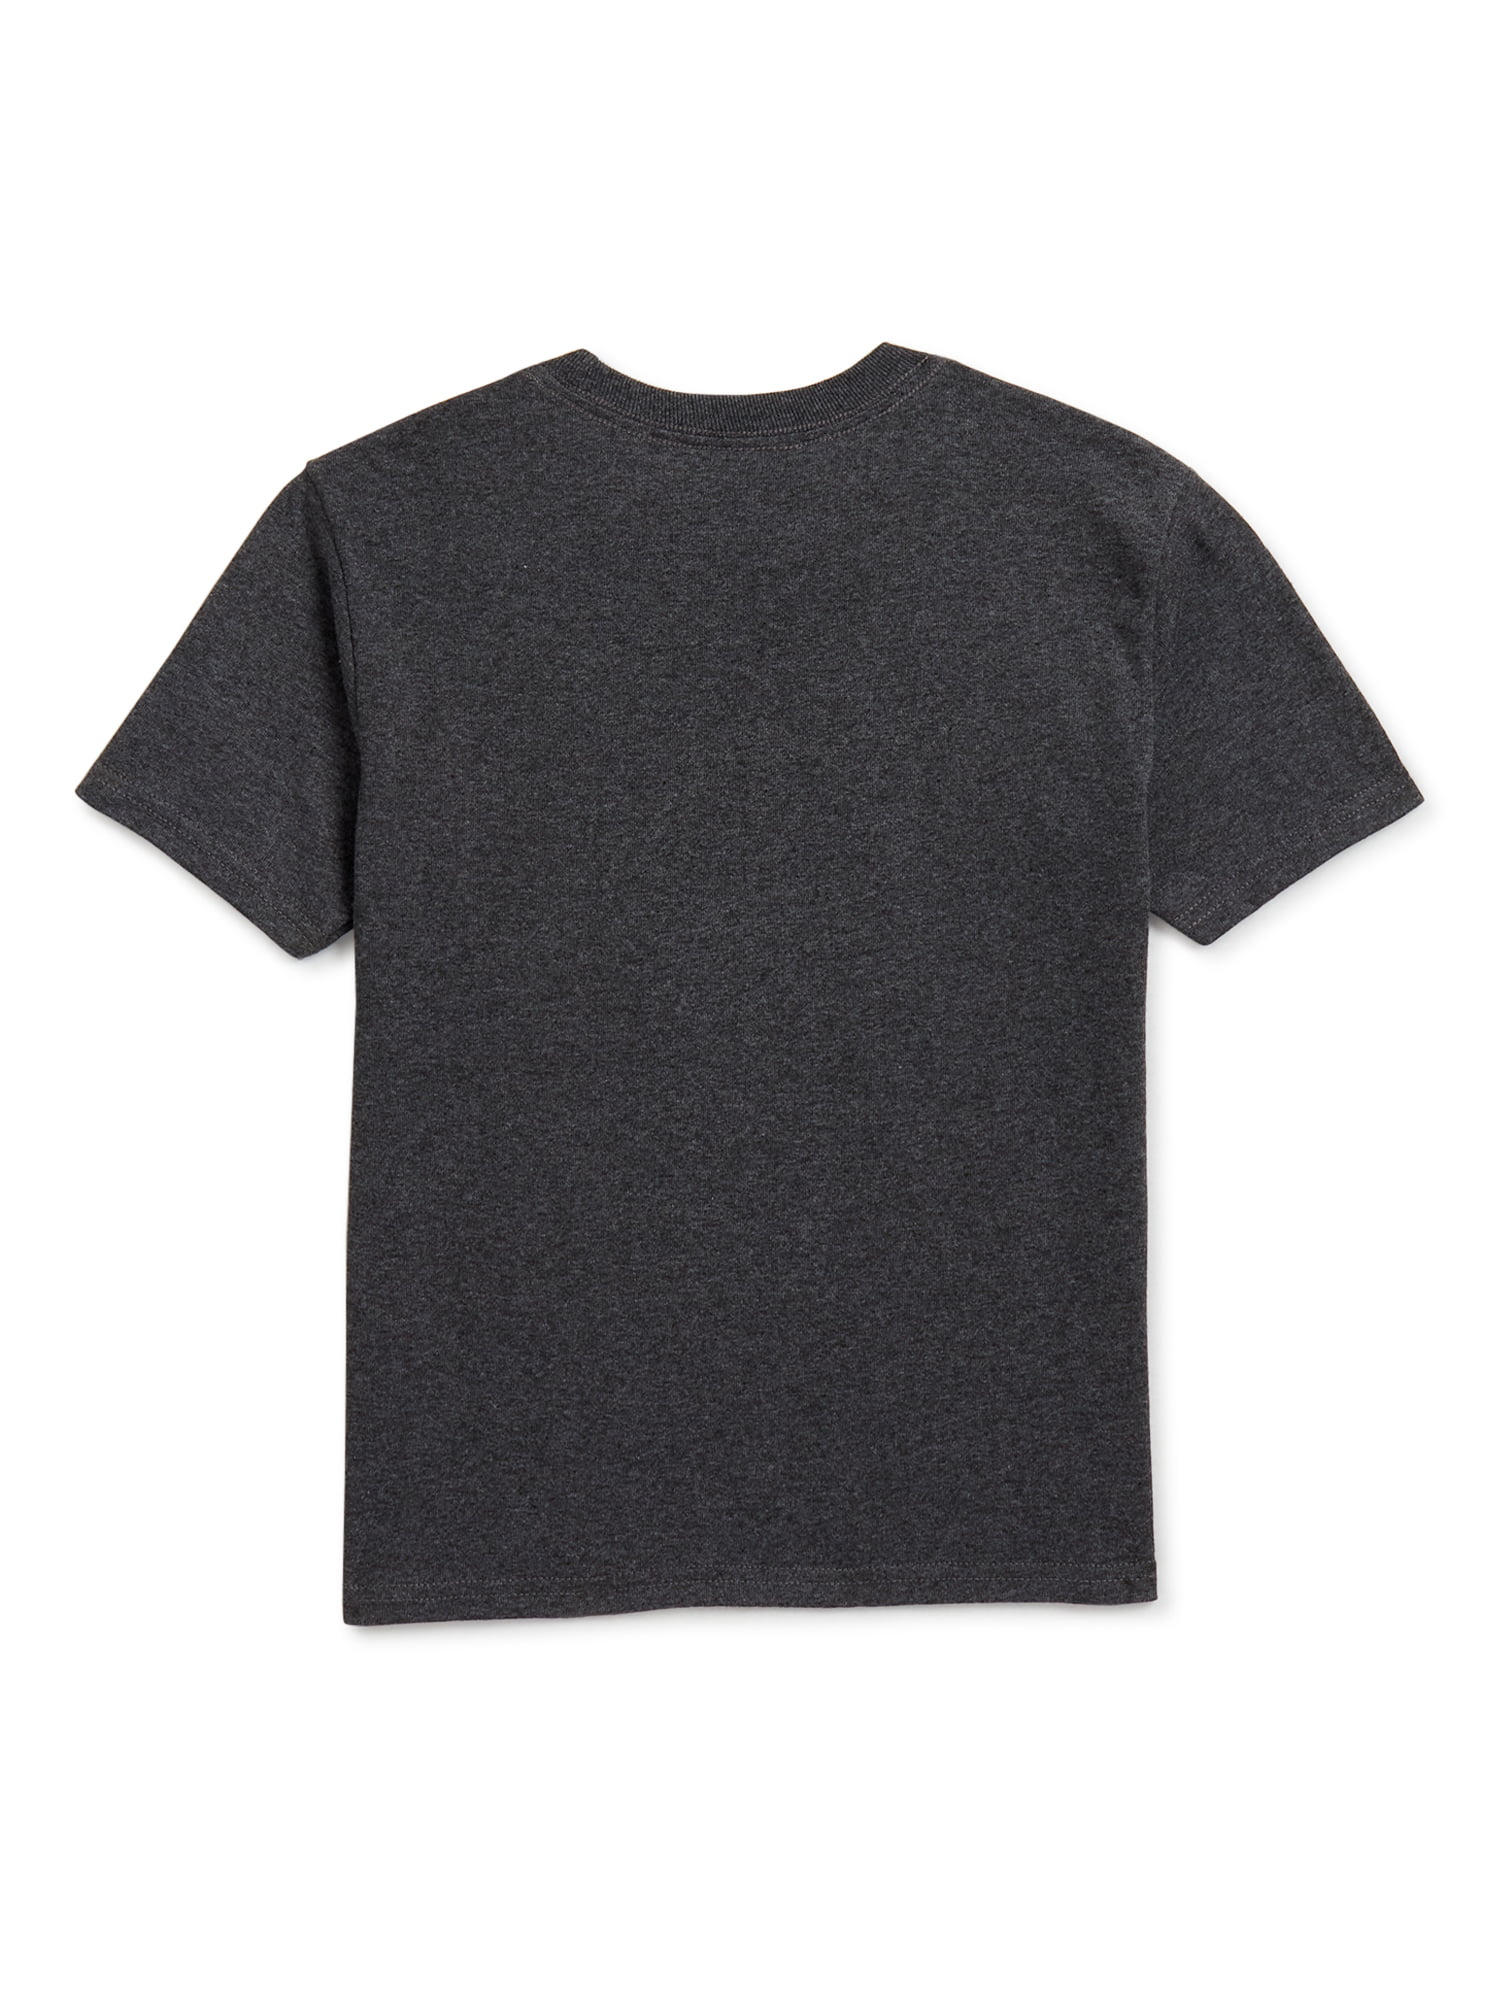 Boys Black Roblox T-Shirt Size XL (s18) RN# 115665 - FREE SHIPPING